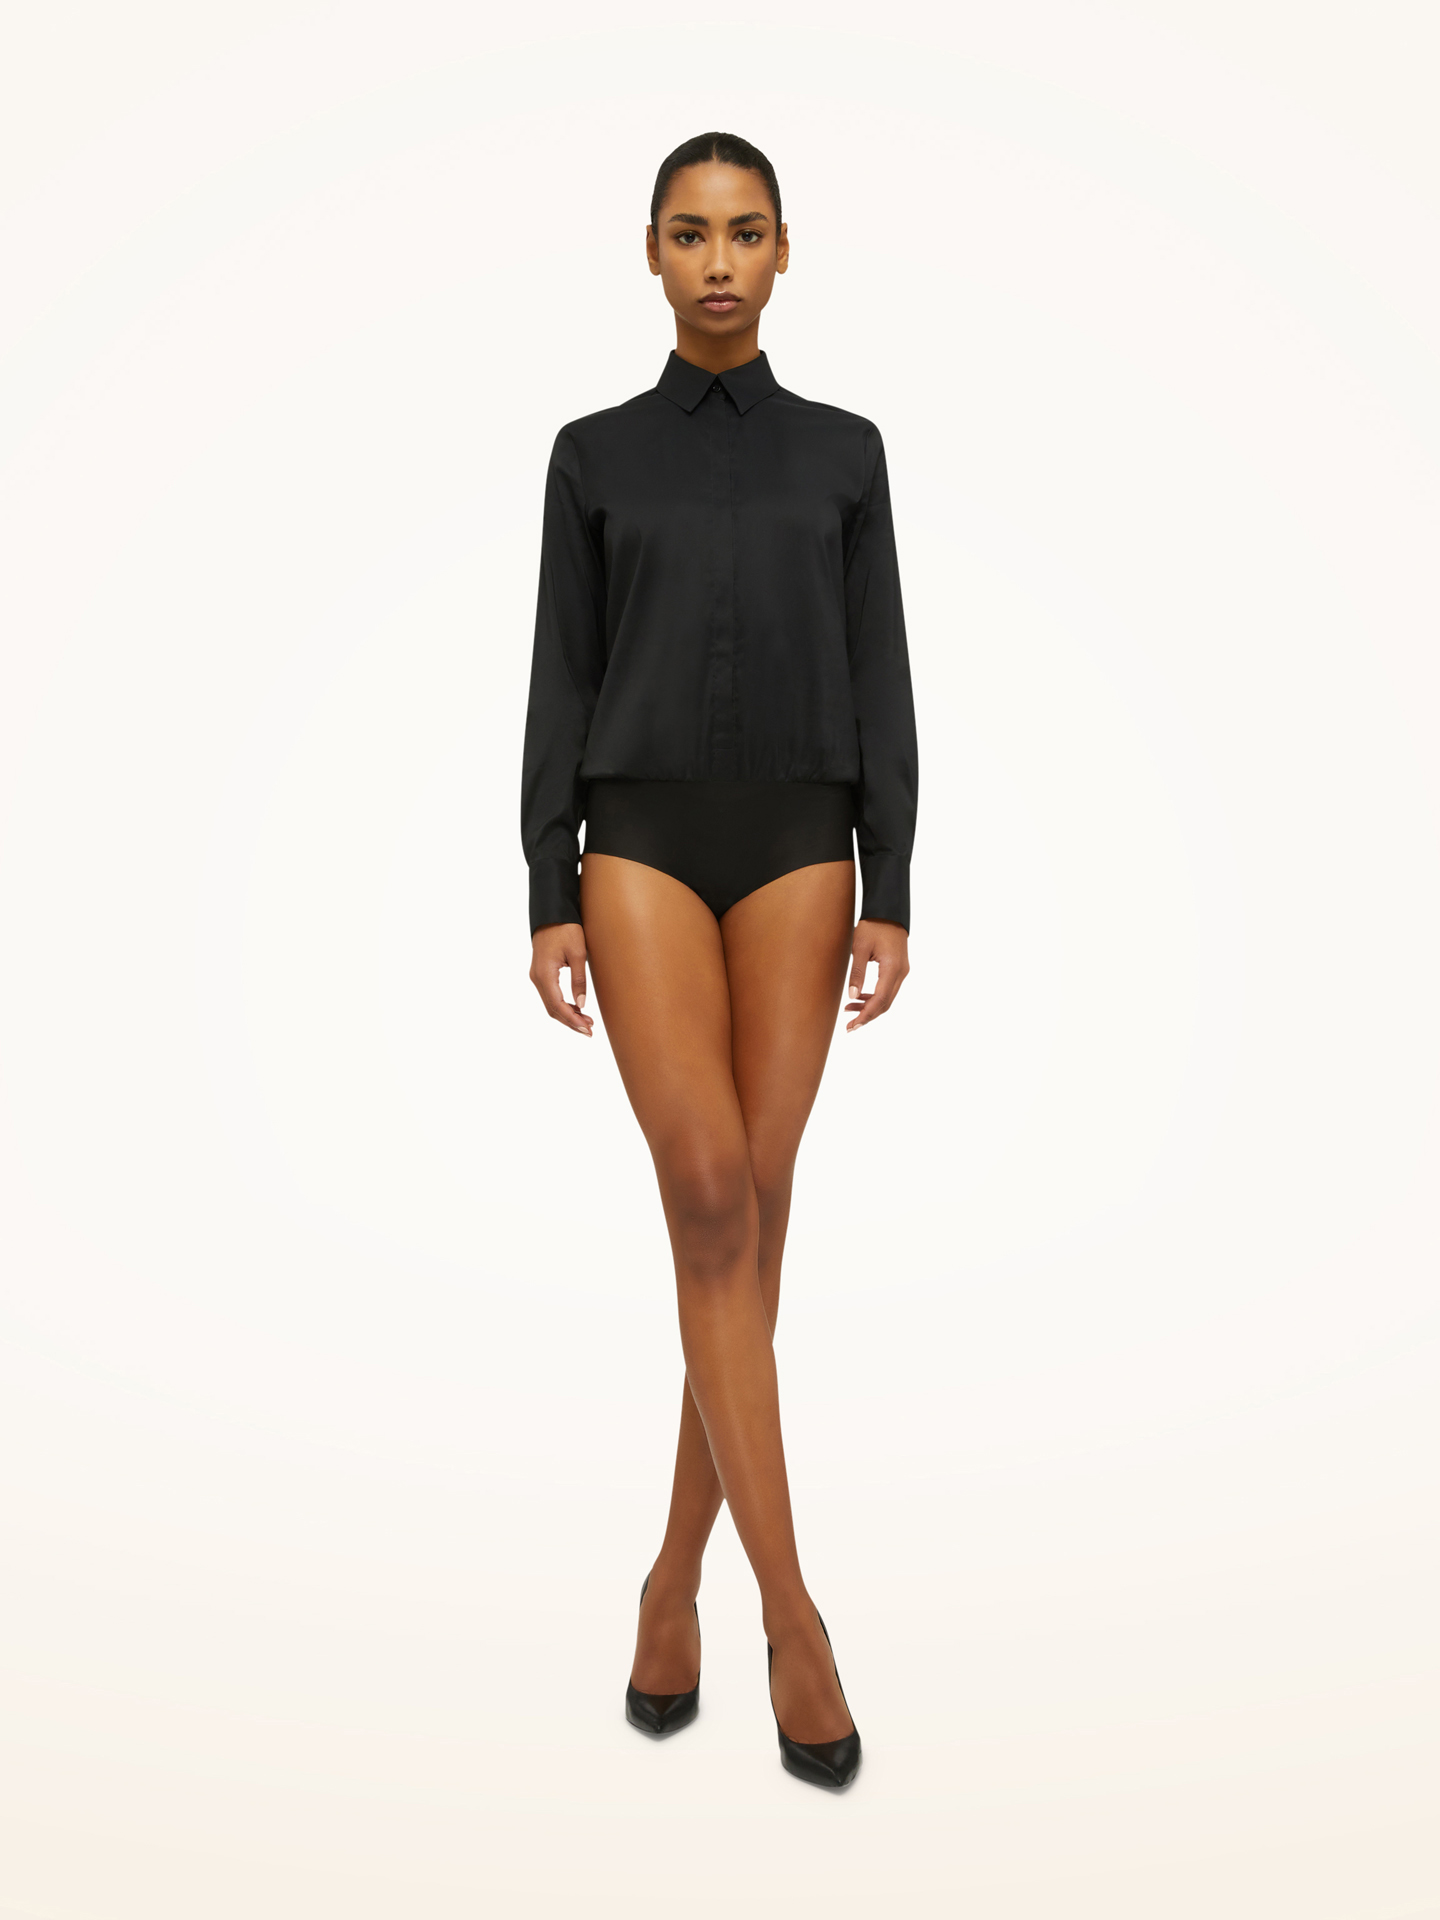 Wolford – London Effect Panty Body, Frau, black, Größe: 40